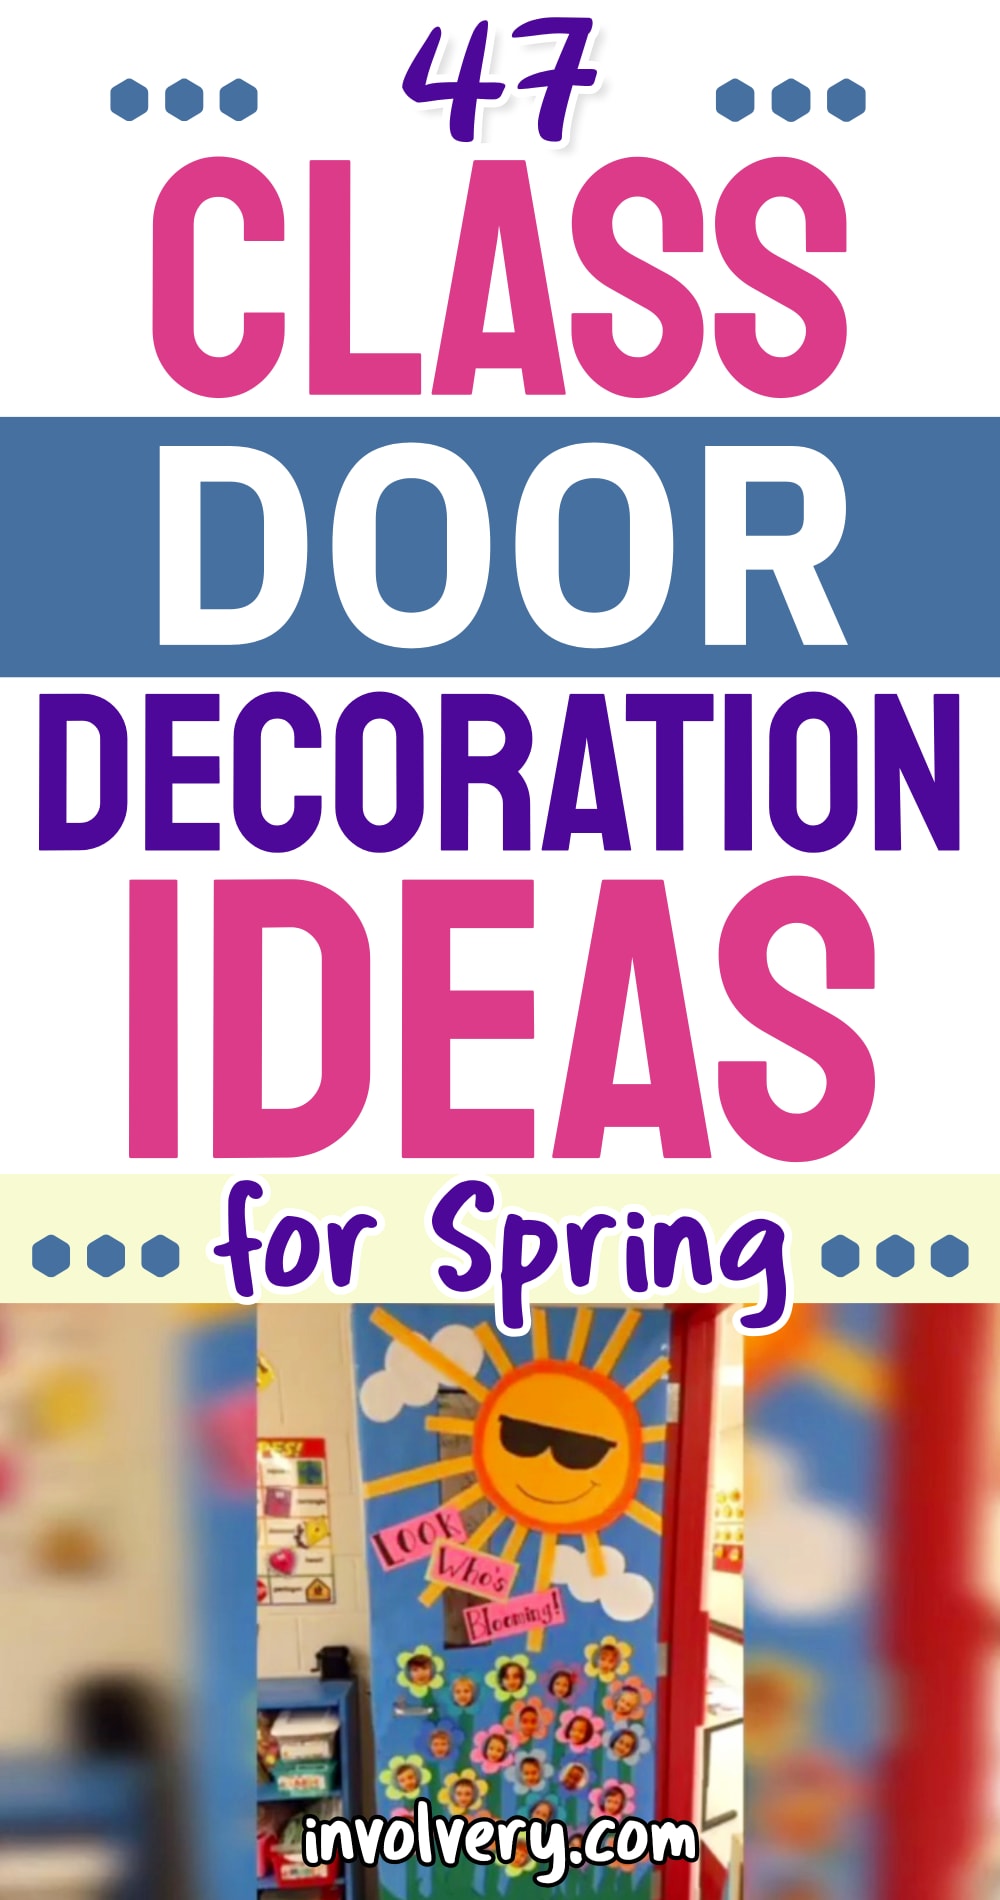 Class door decoration ideas for Spring